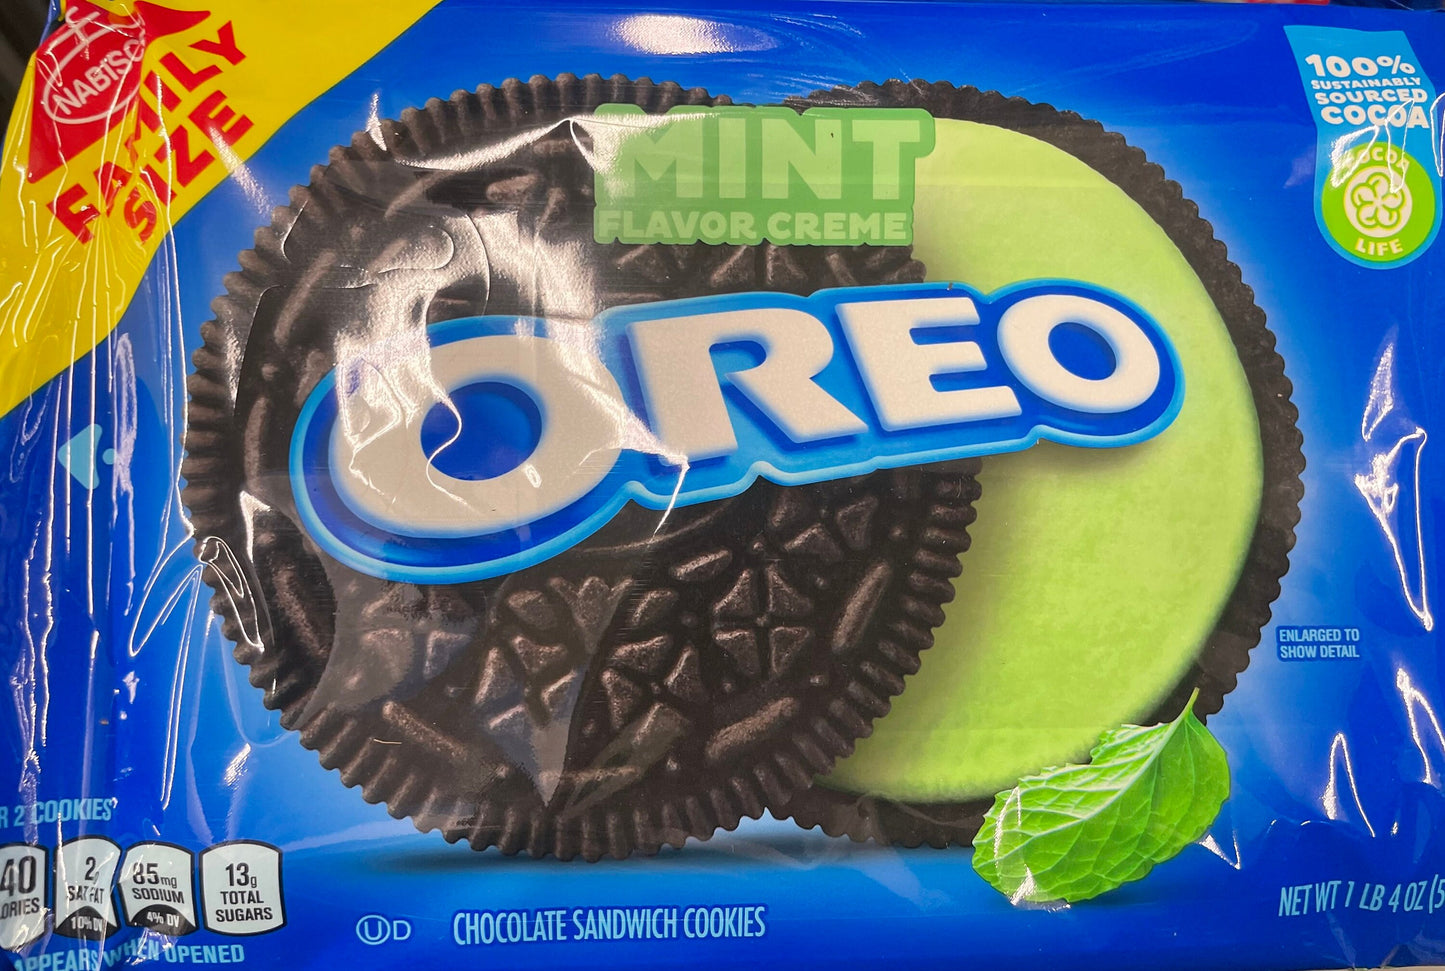 Oreo Mint Flavor Creme Family Size